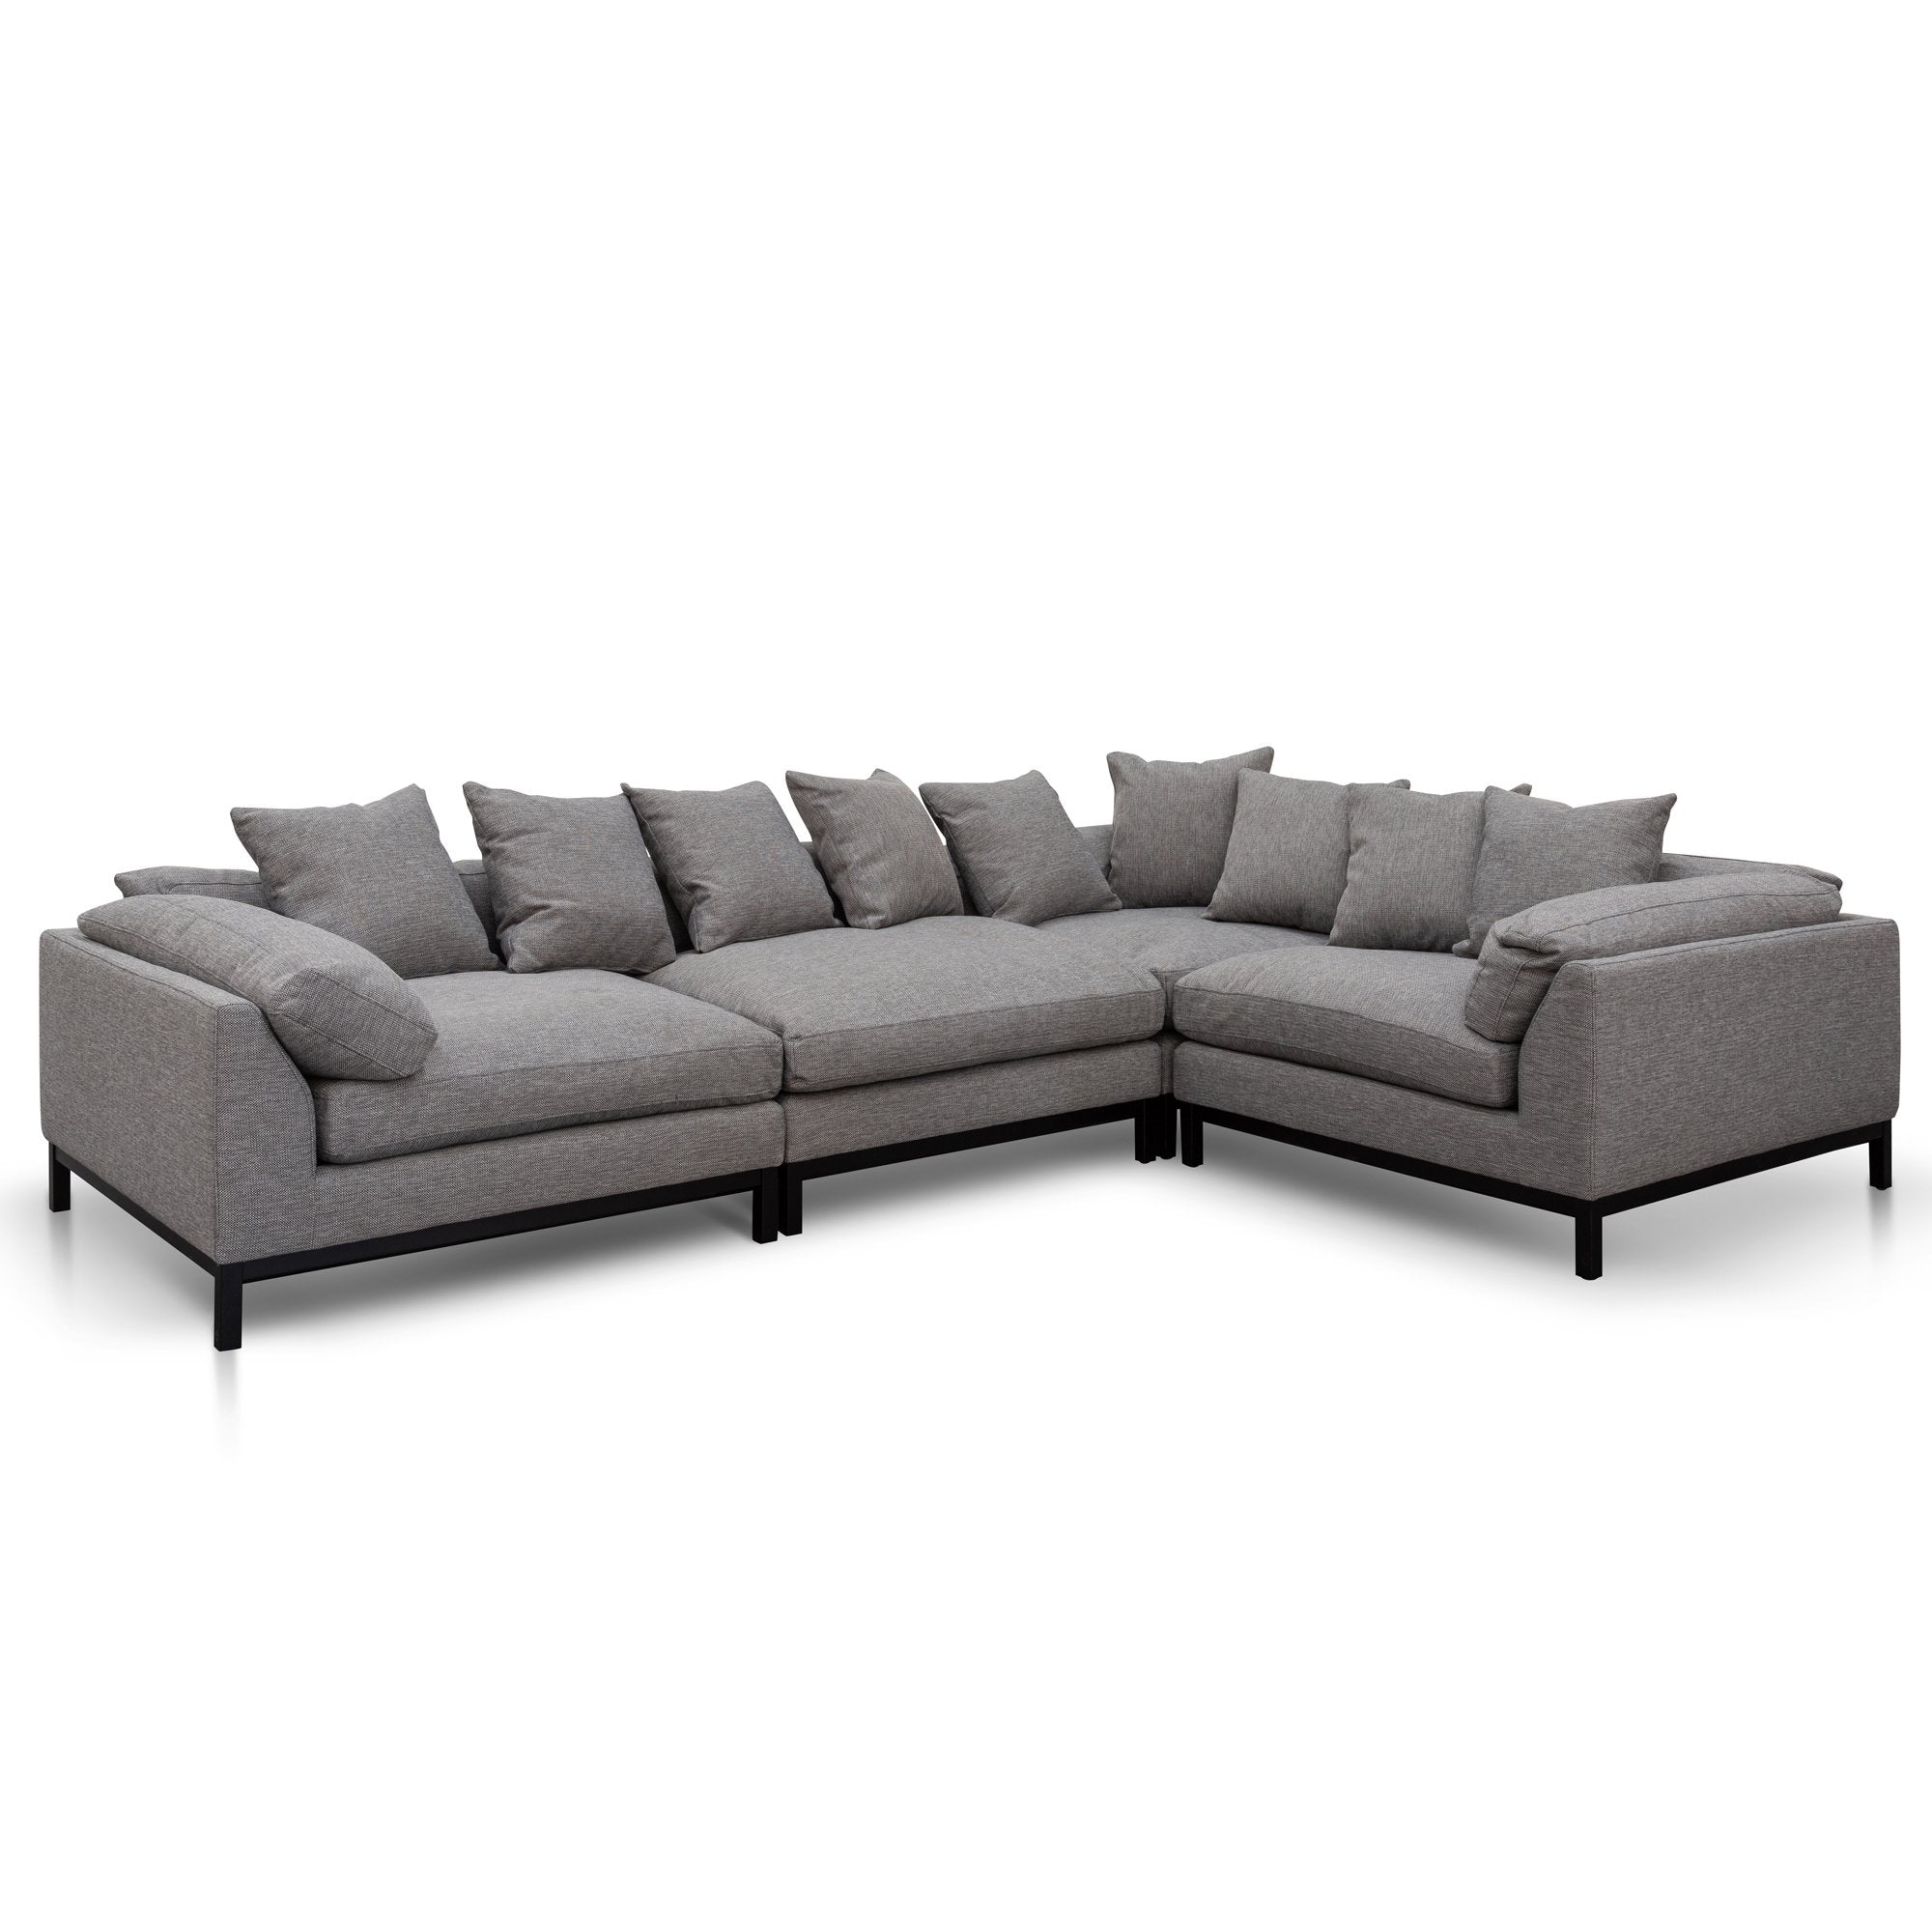 Everleigh Corner Fabric Sofa - Graphite Grey